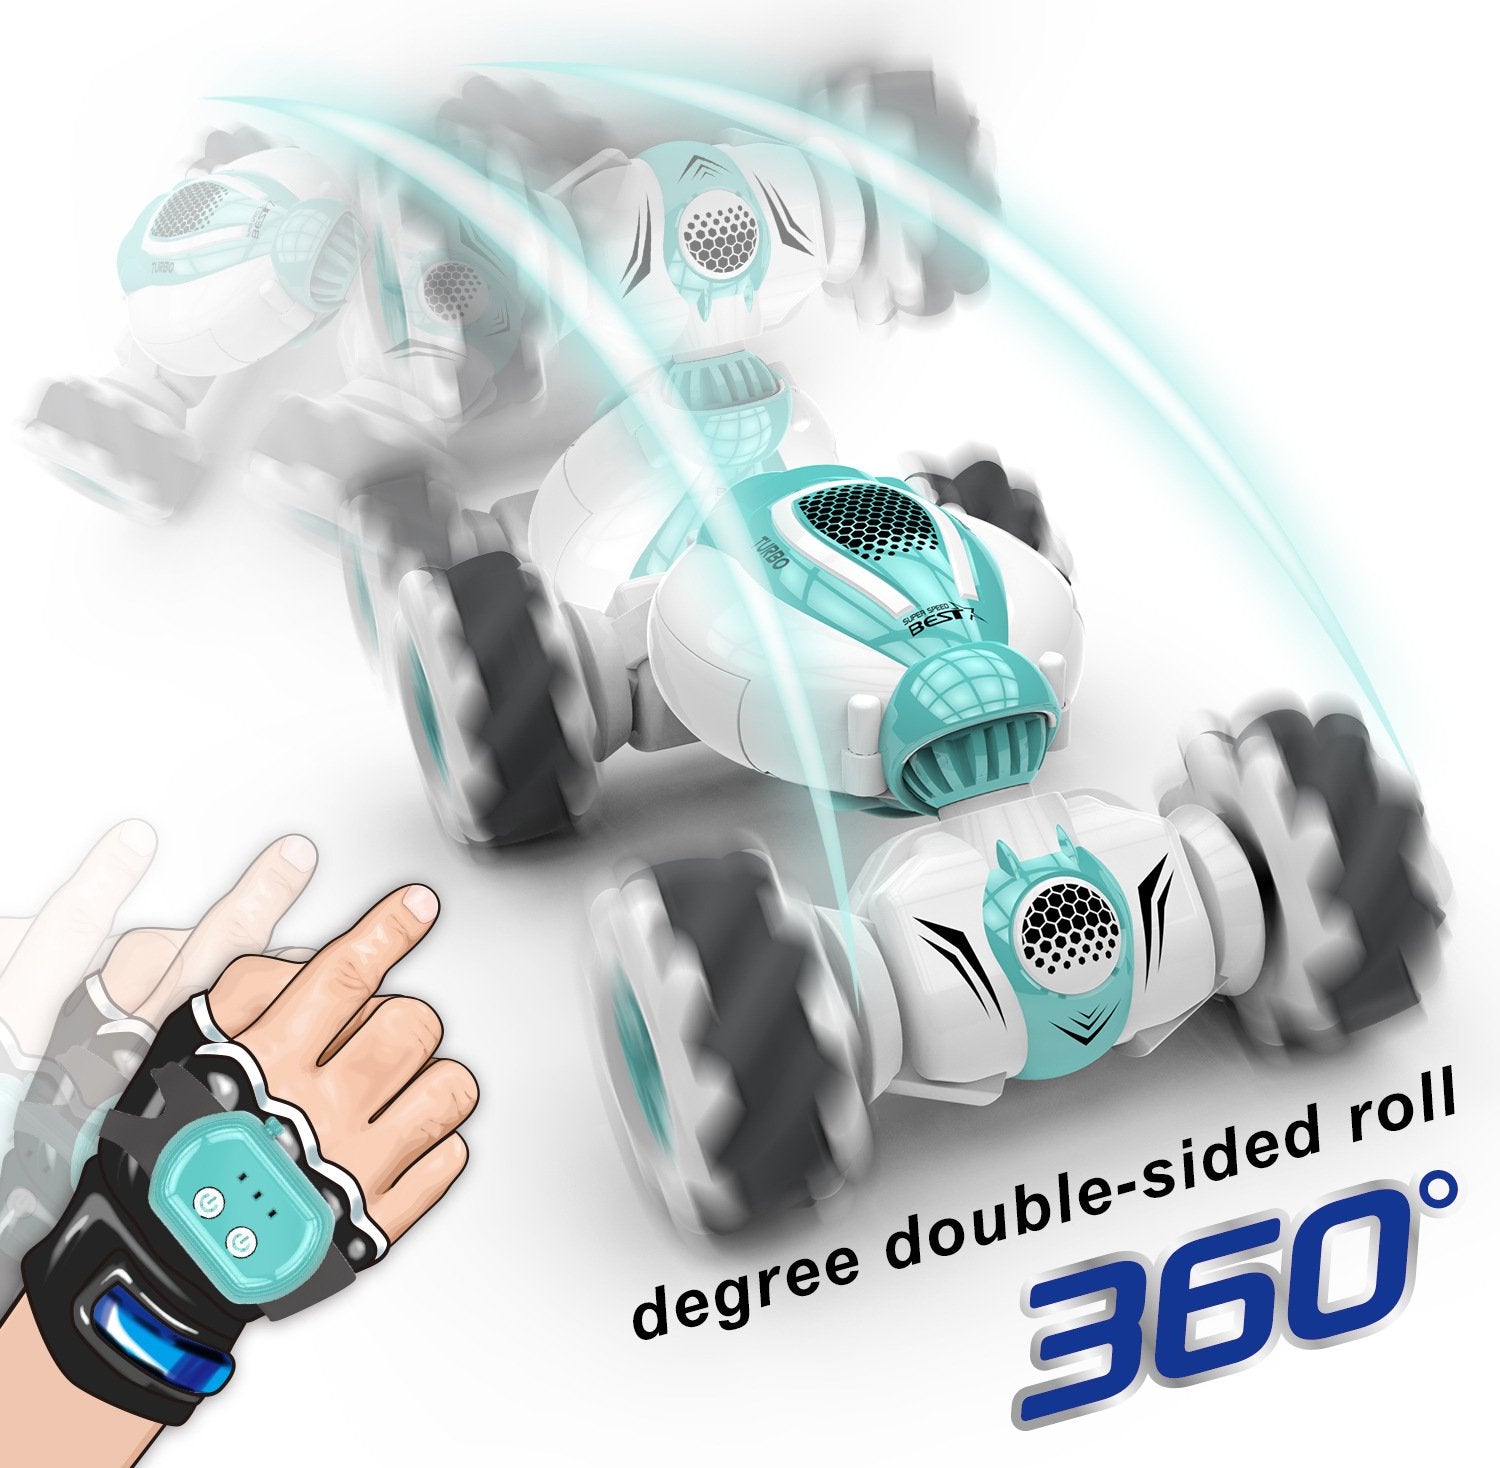 2.4G Remote Control Gesture-sensitive Stunt Car Twisting Change